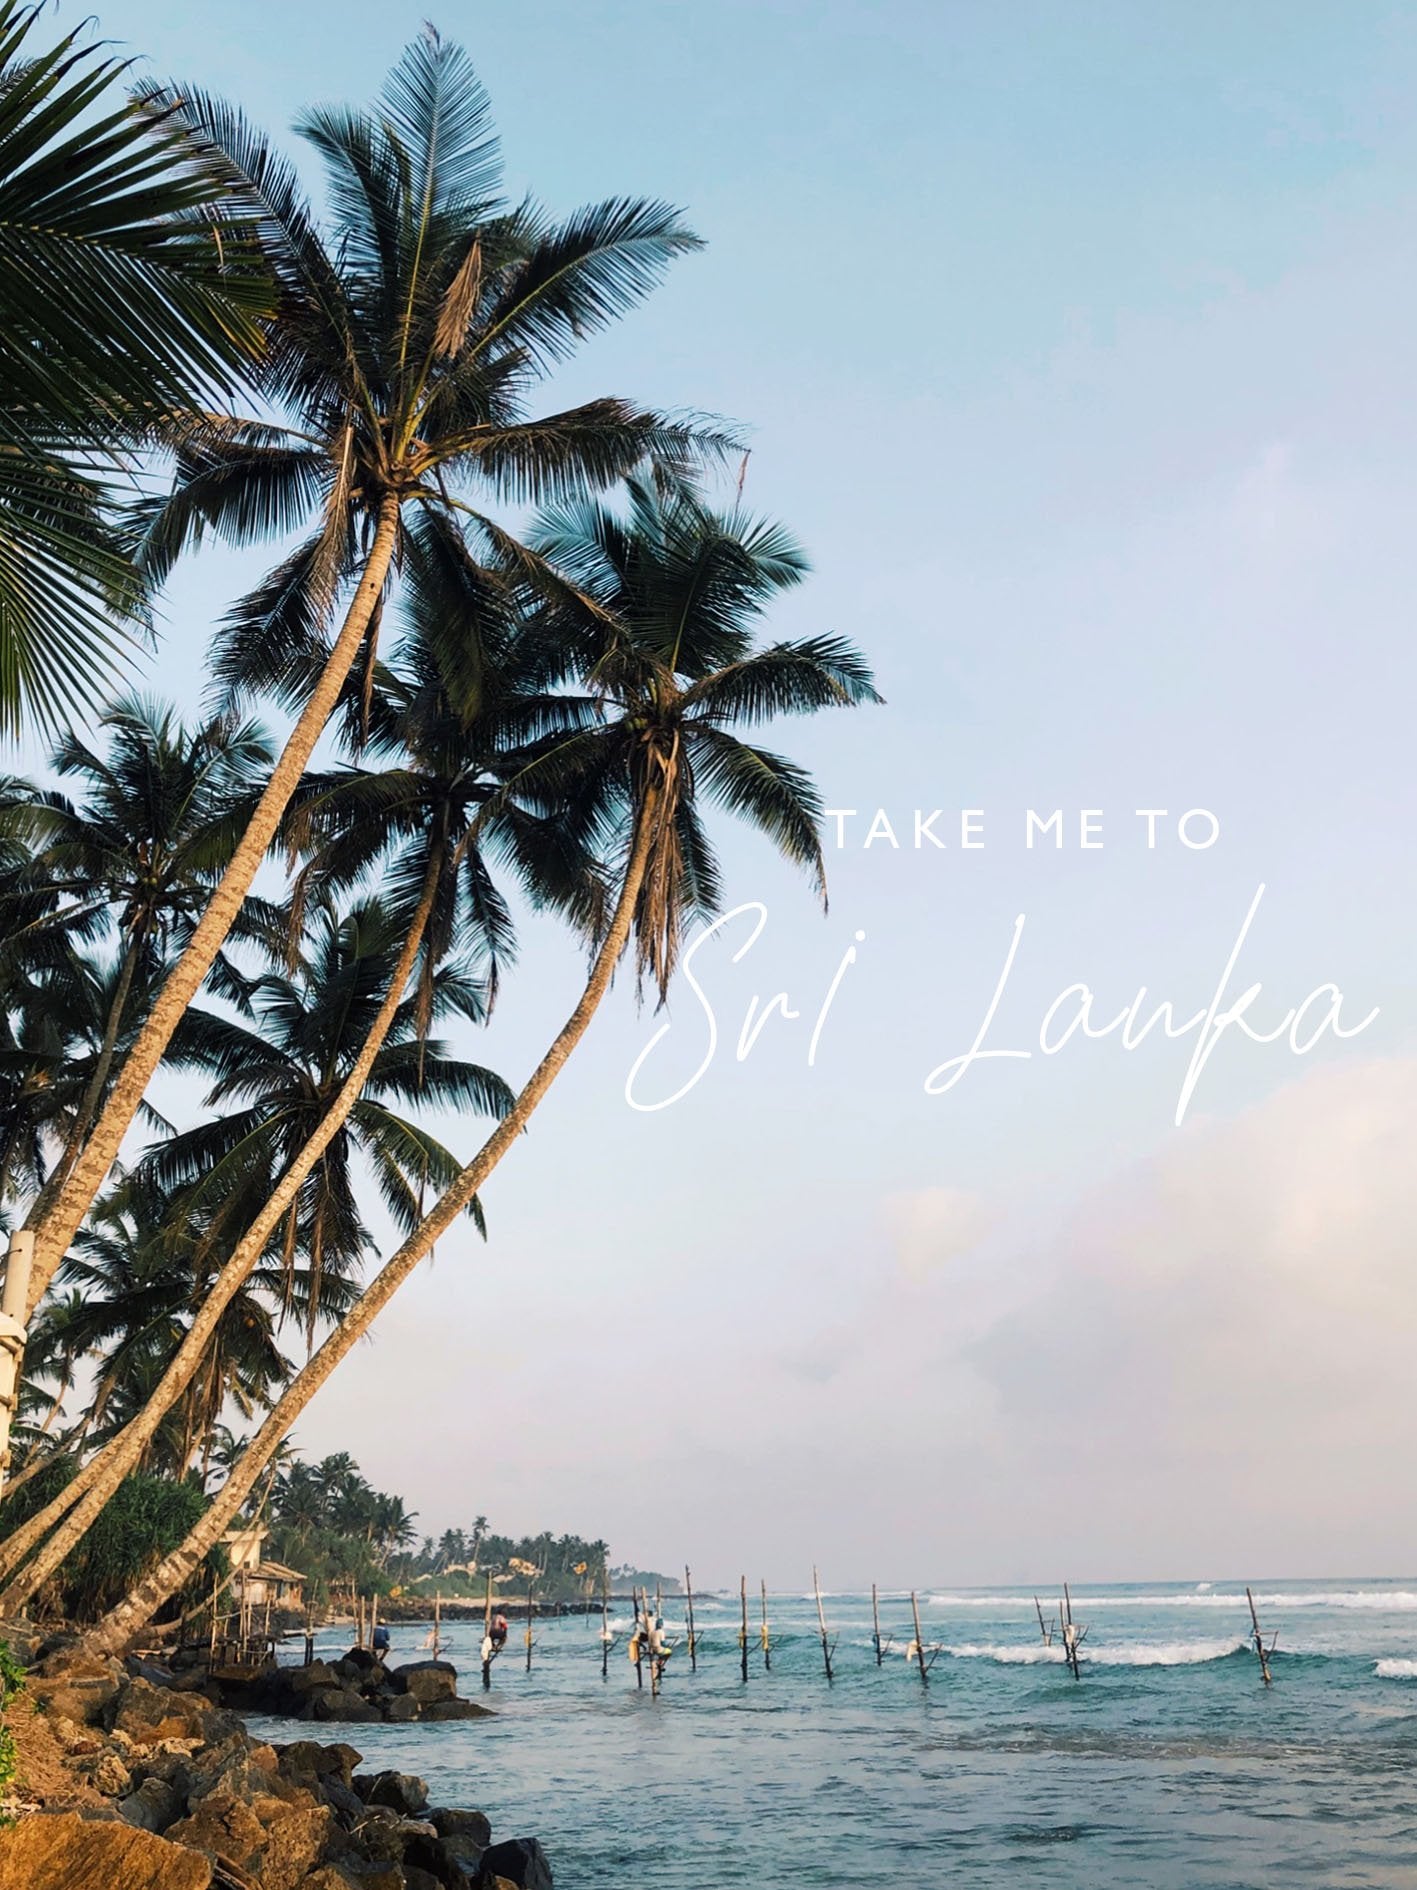 Take Me To: Sri Lanka